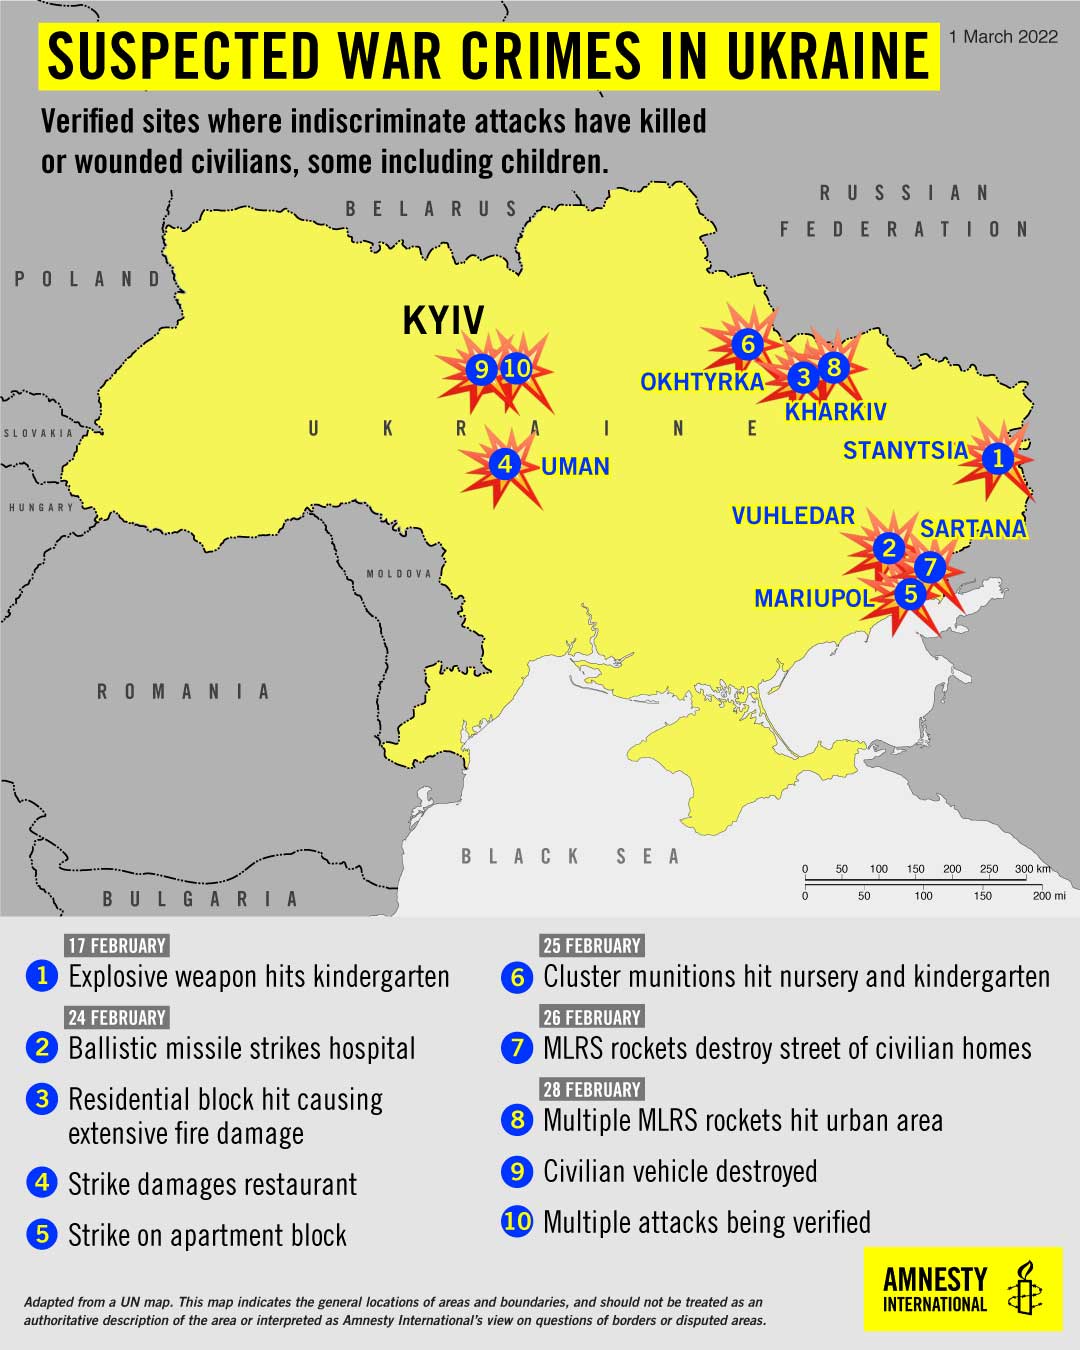 Defense Express / Suspected War Crimes in Ukraine